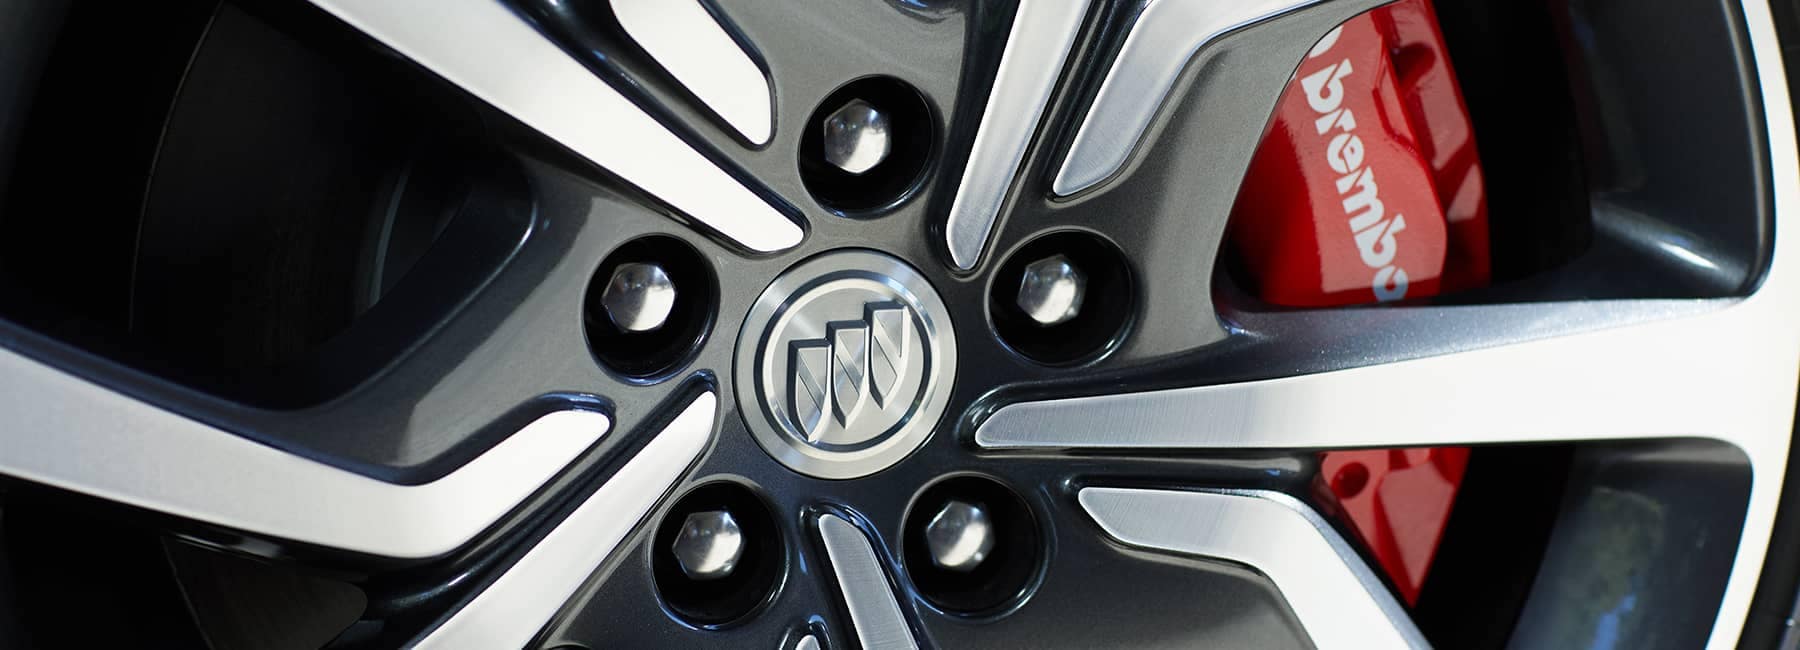 2020 Buick Regal Sportback Tire Rim Closeup